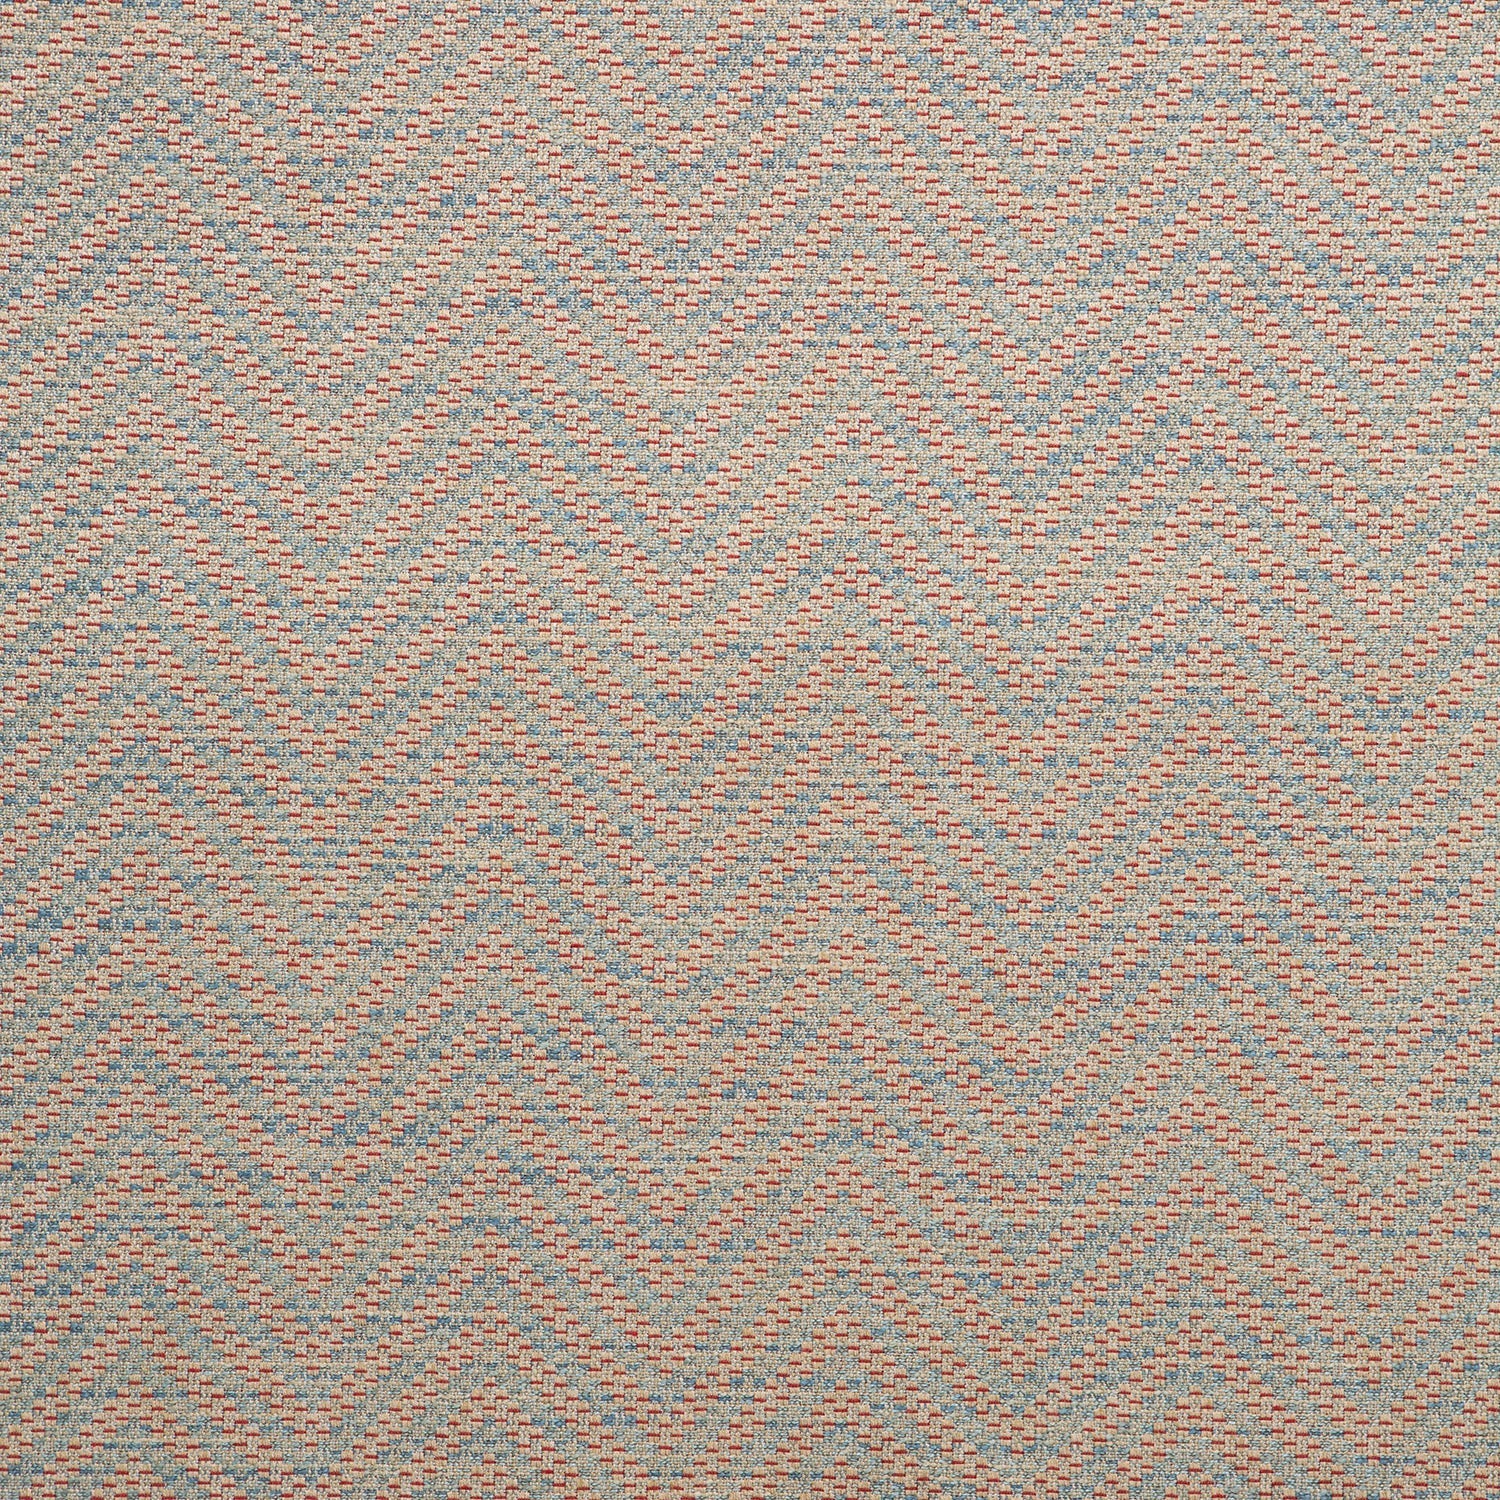 Tanuki - Sandstone, Curtain Fabric, Upholstery Fabric